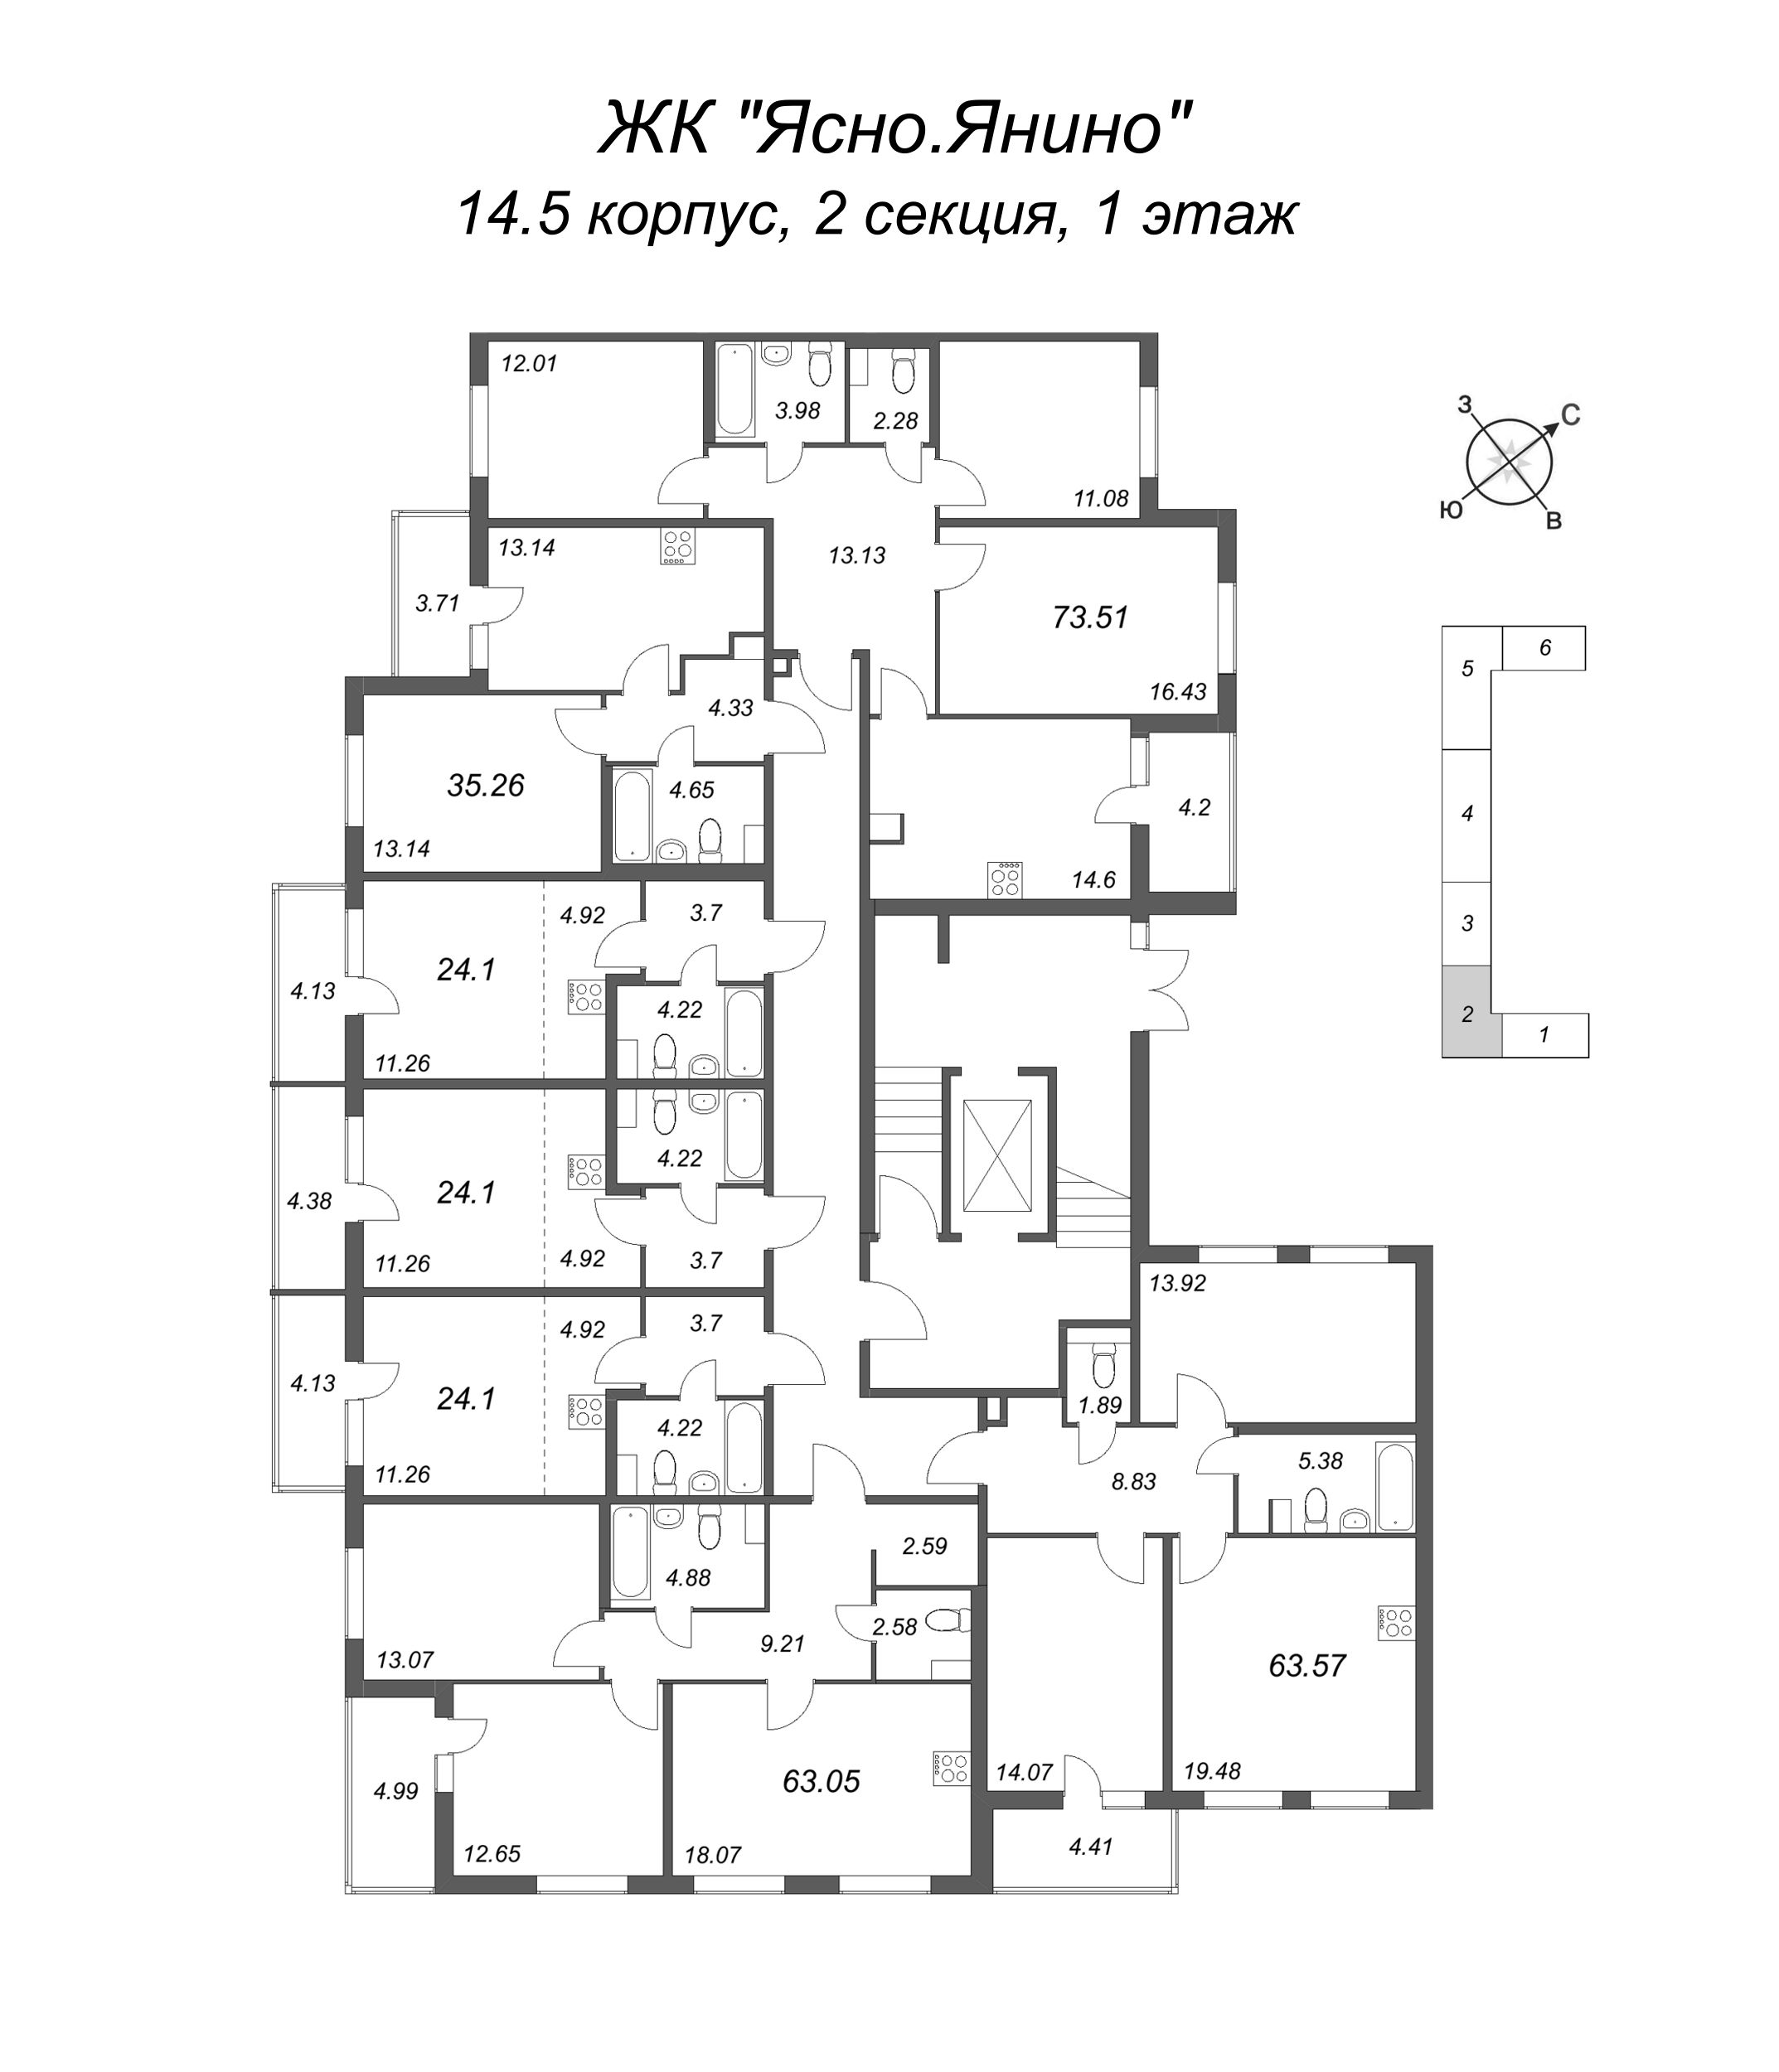 3-комнатная квартира, 73.51 м² в ЖК "Ясно.Янино" - планировка этажа